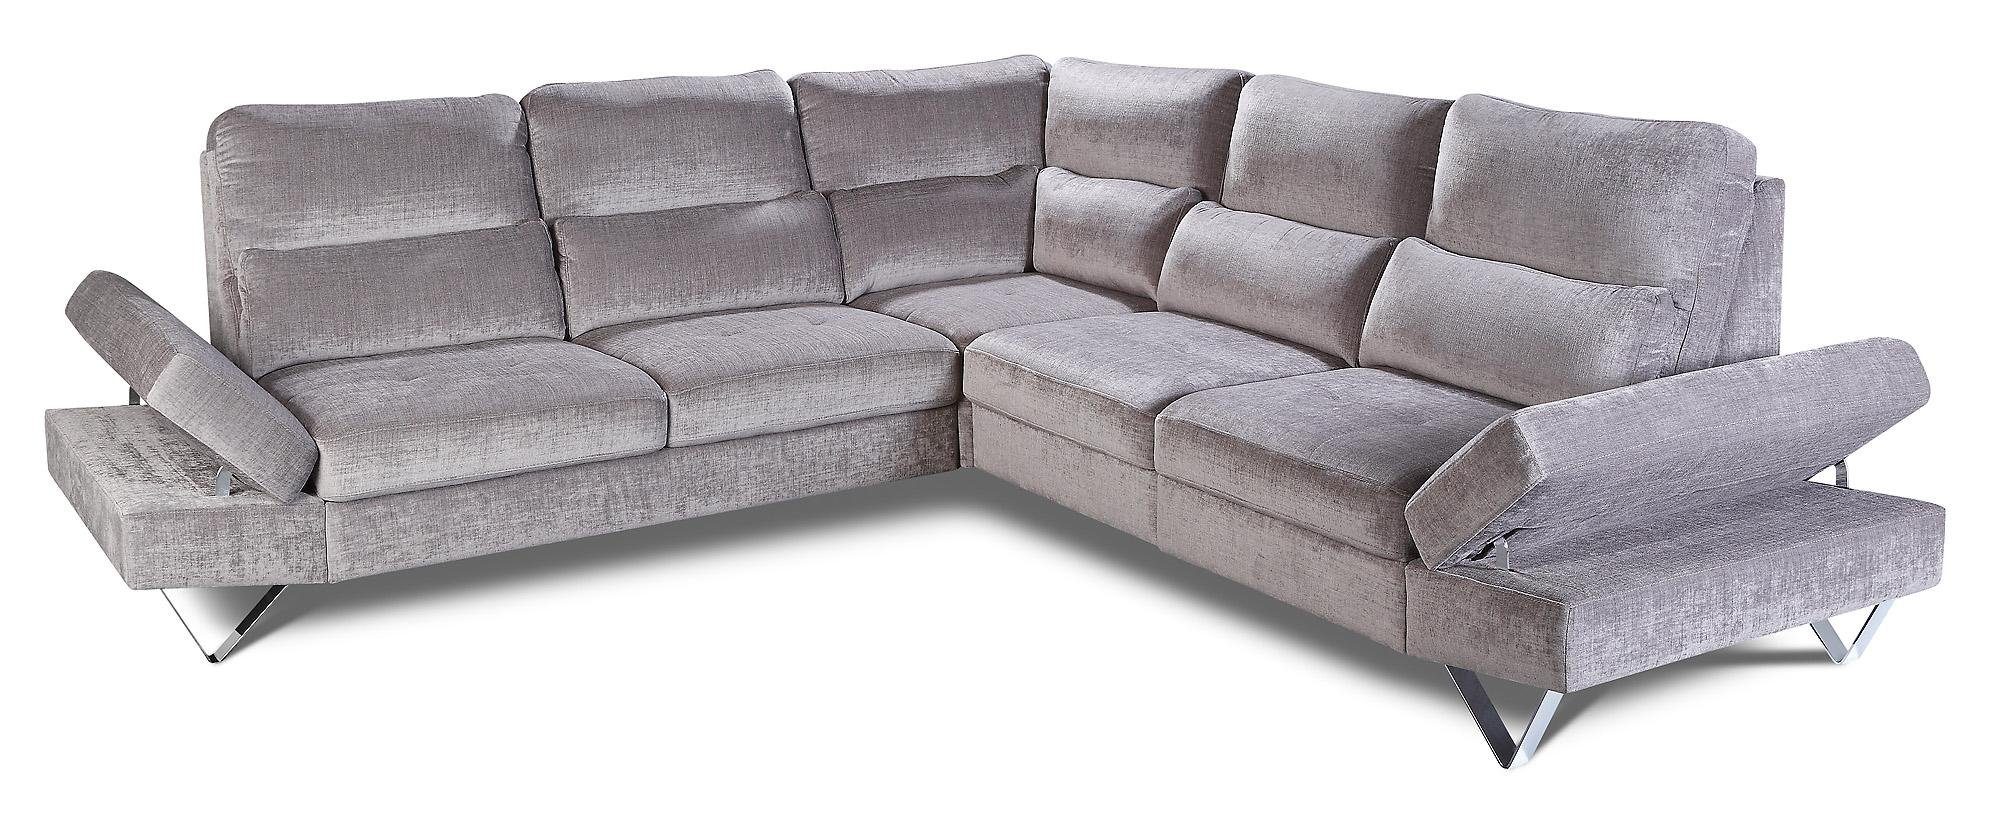 JVmoebel Ecksofa, Ecksofa Relax Polster Couchen Multifunktions Verstellbare Couch